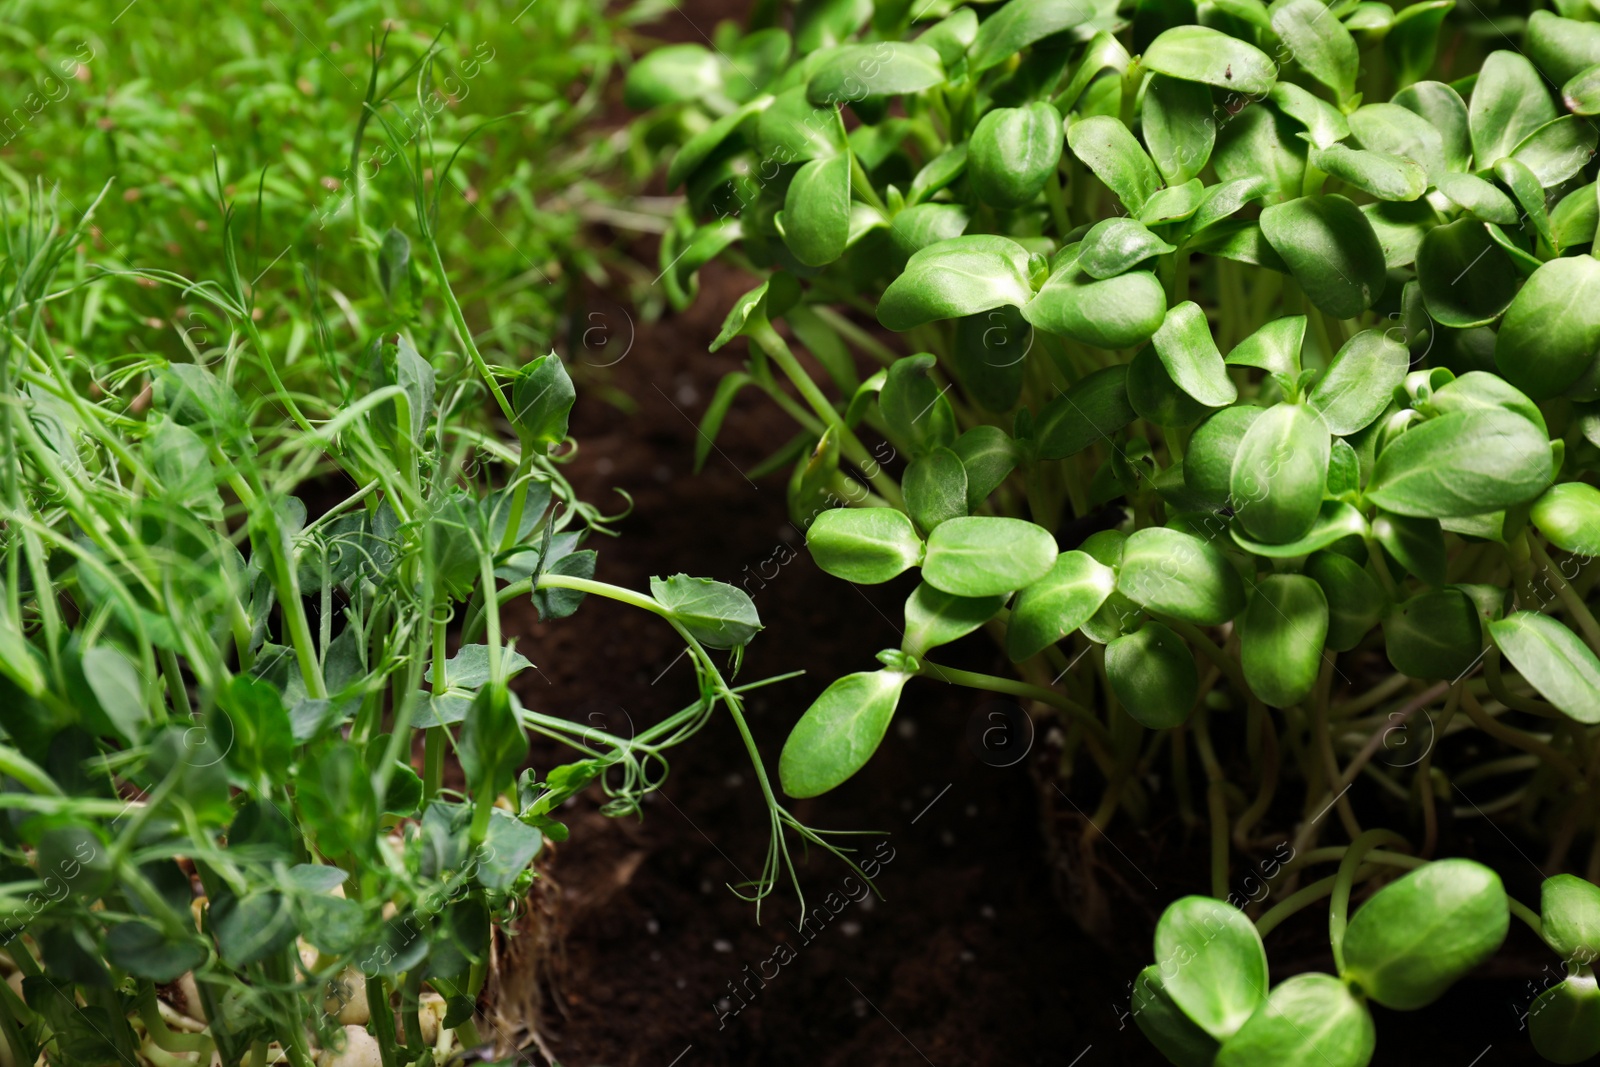 Photo of Fresh organic microgreens growing in soil, closeup